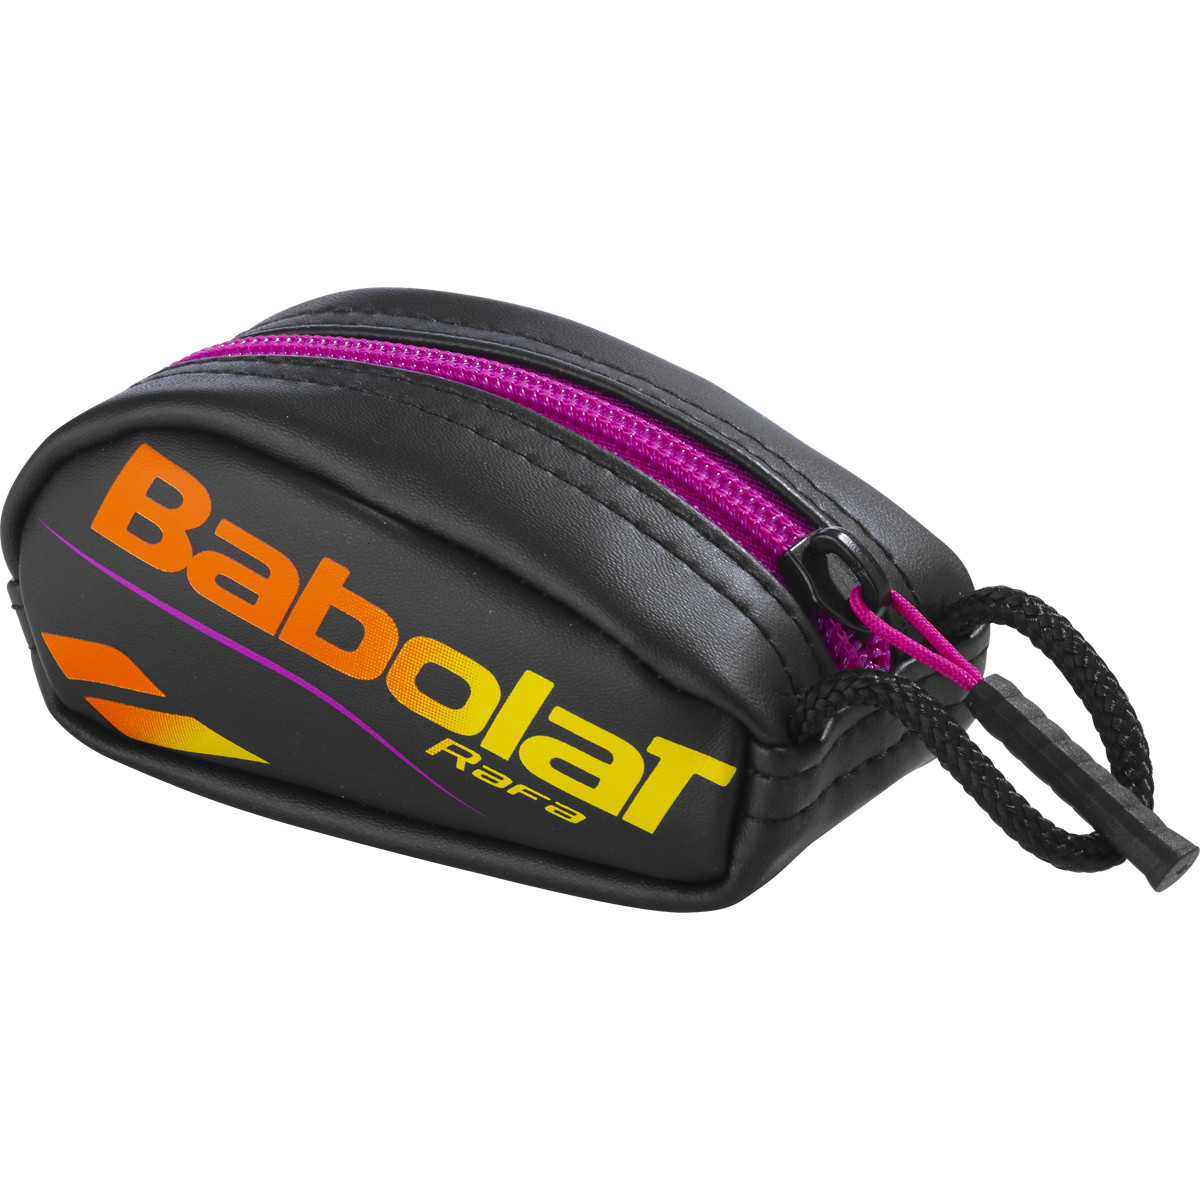 Babolat Ball Llavero de Padel 